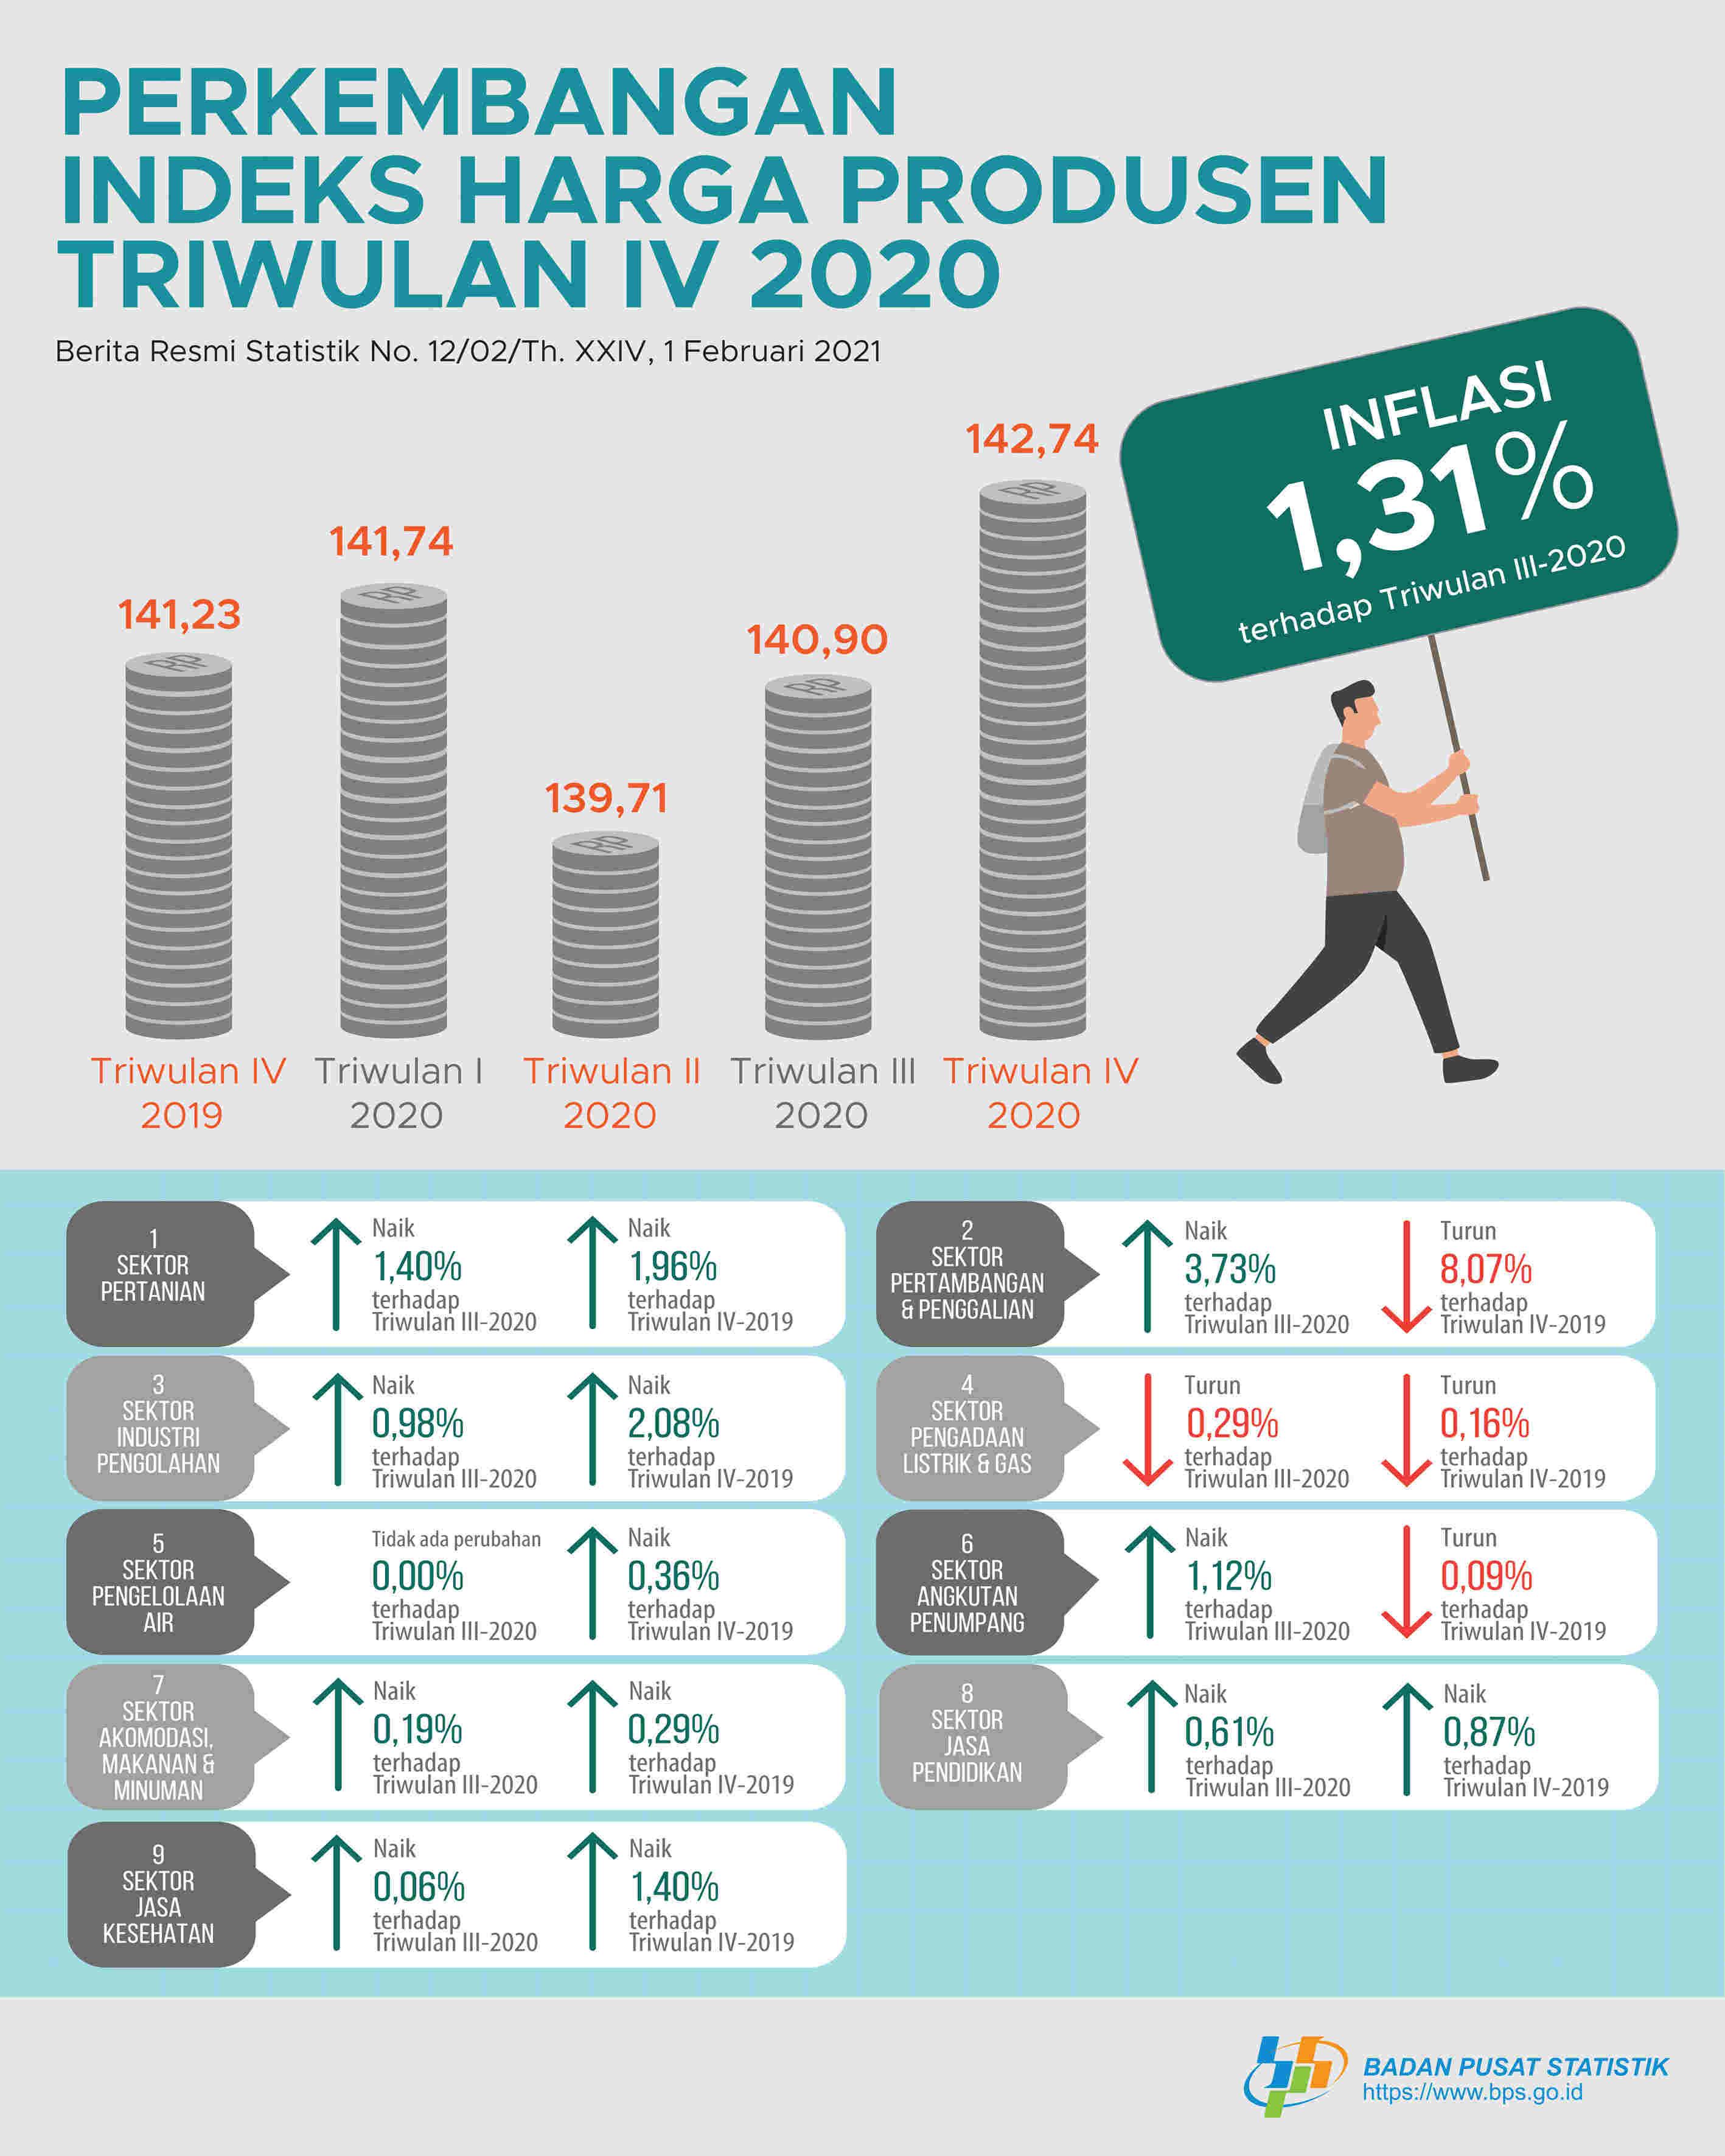 Harga Produsen Mengalami Inflasi 1,31 Persen di Triwulan IV 2020